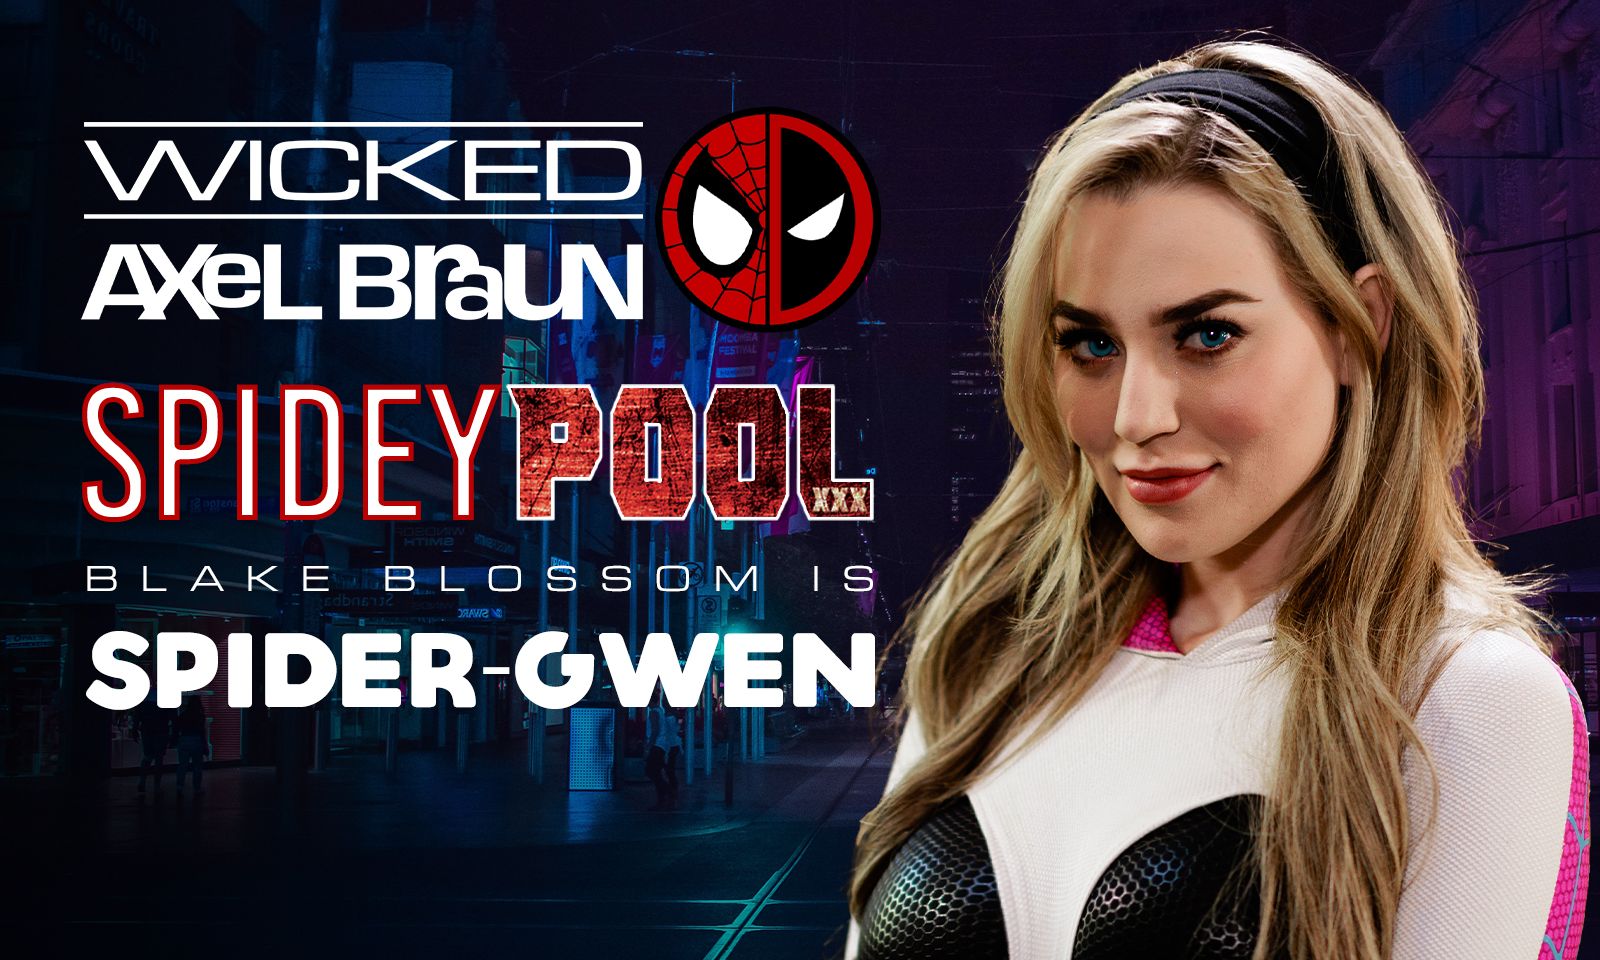 Blake Blossom Cast as Spider-Gwen in Axel Brauns Spideypool | AVN